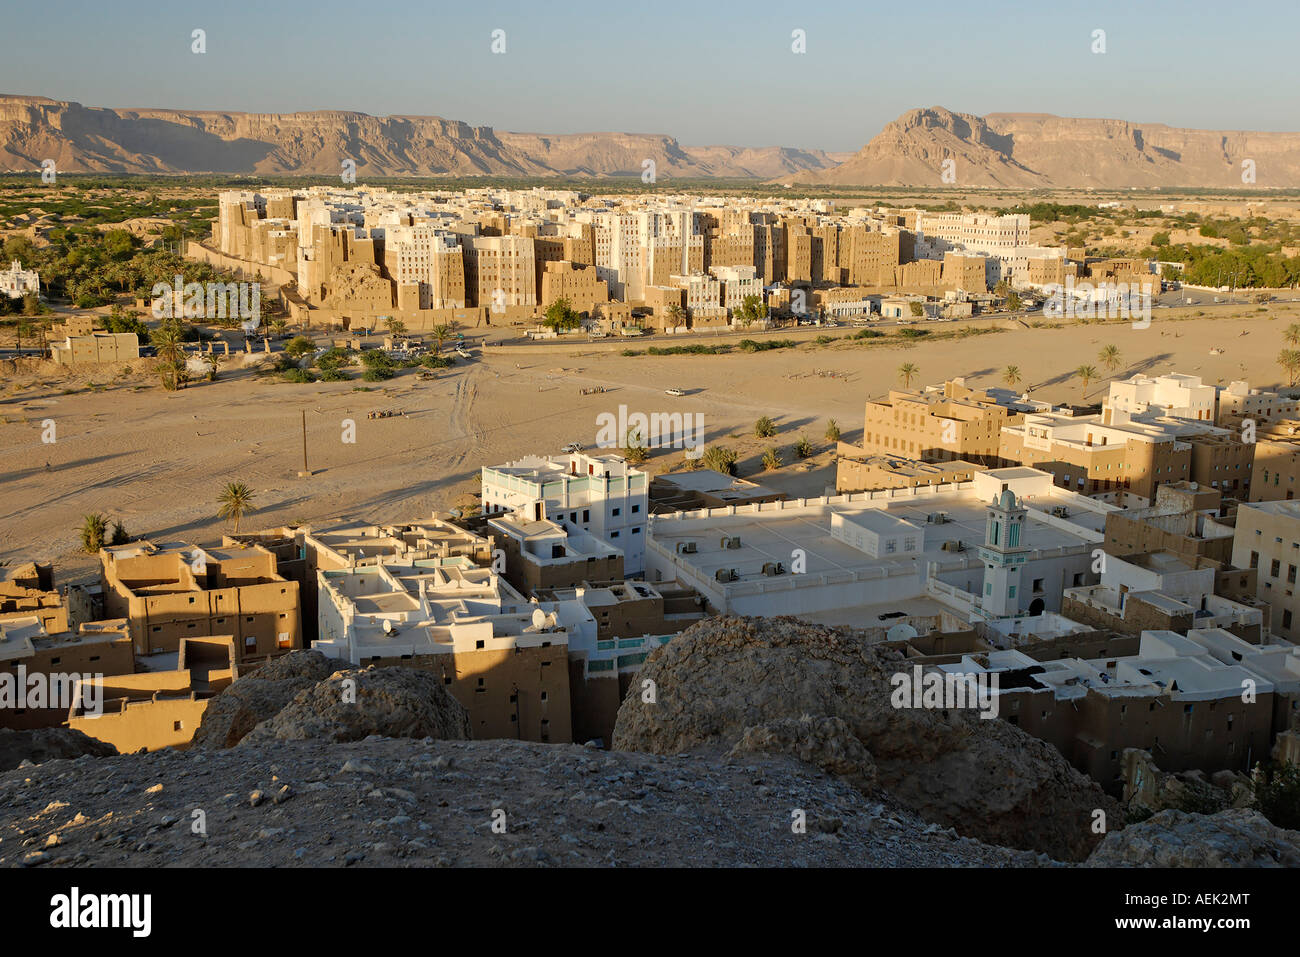 View over the old town of Shibam, Wadi Hadramaut, Yemen Stock Photo